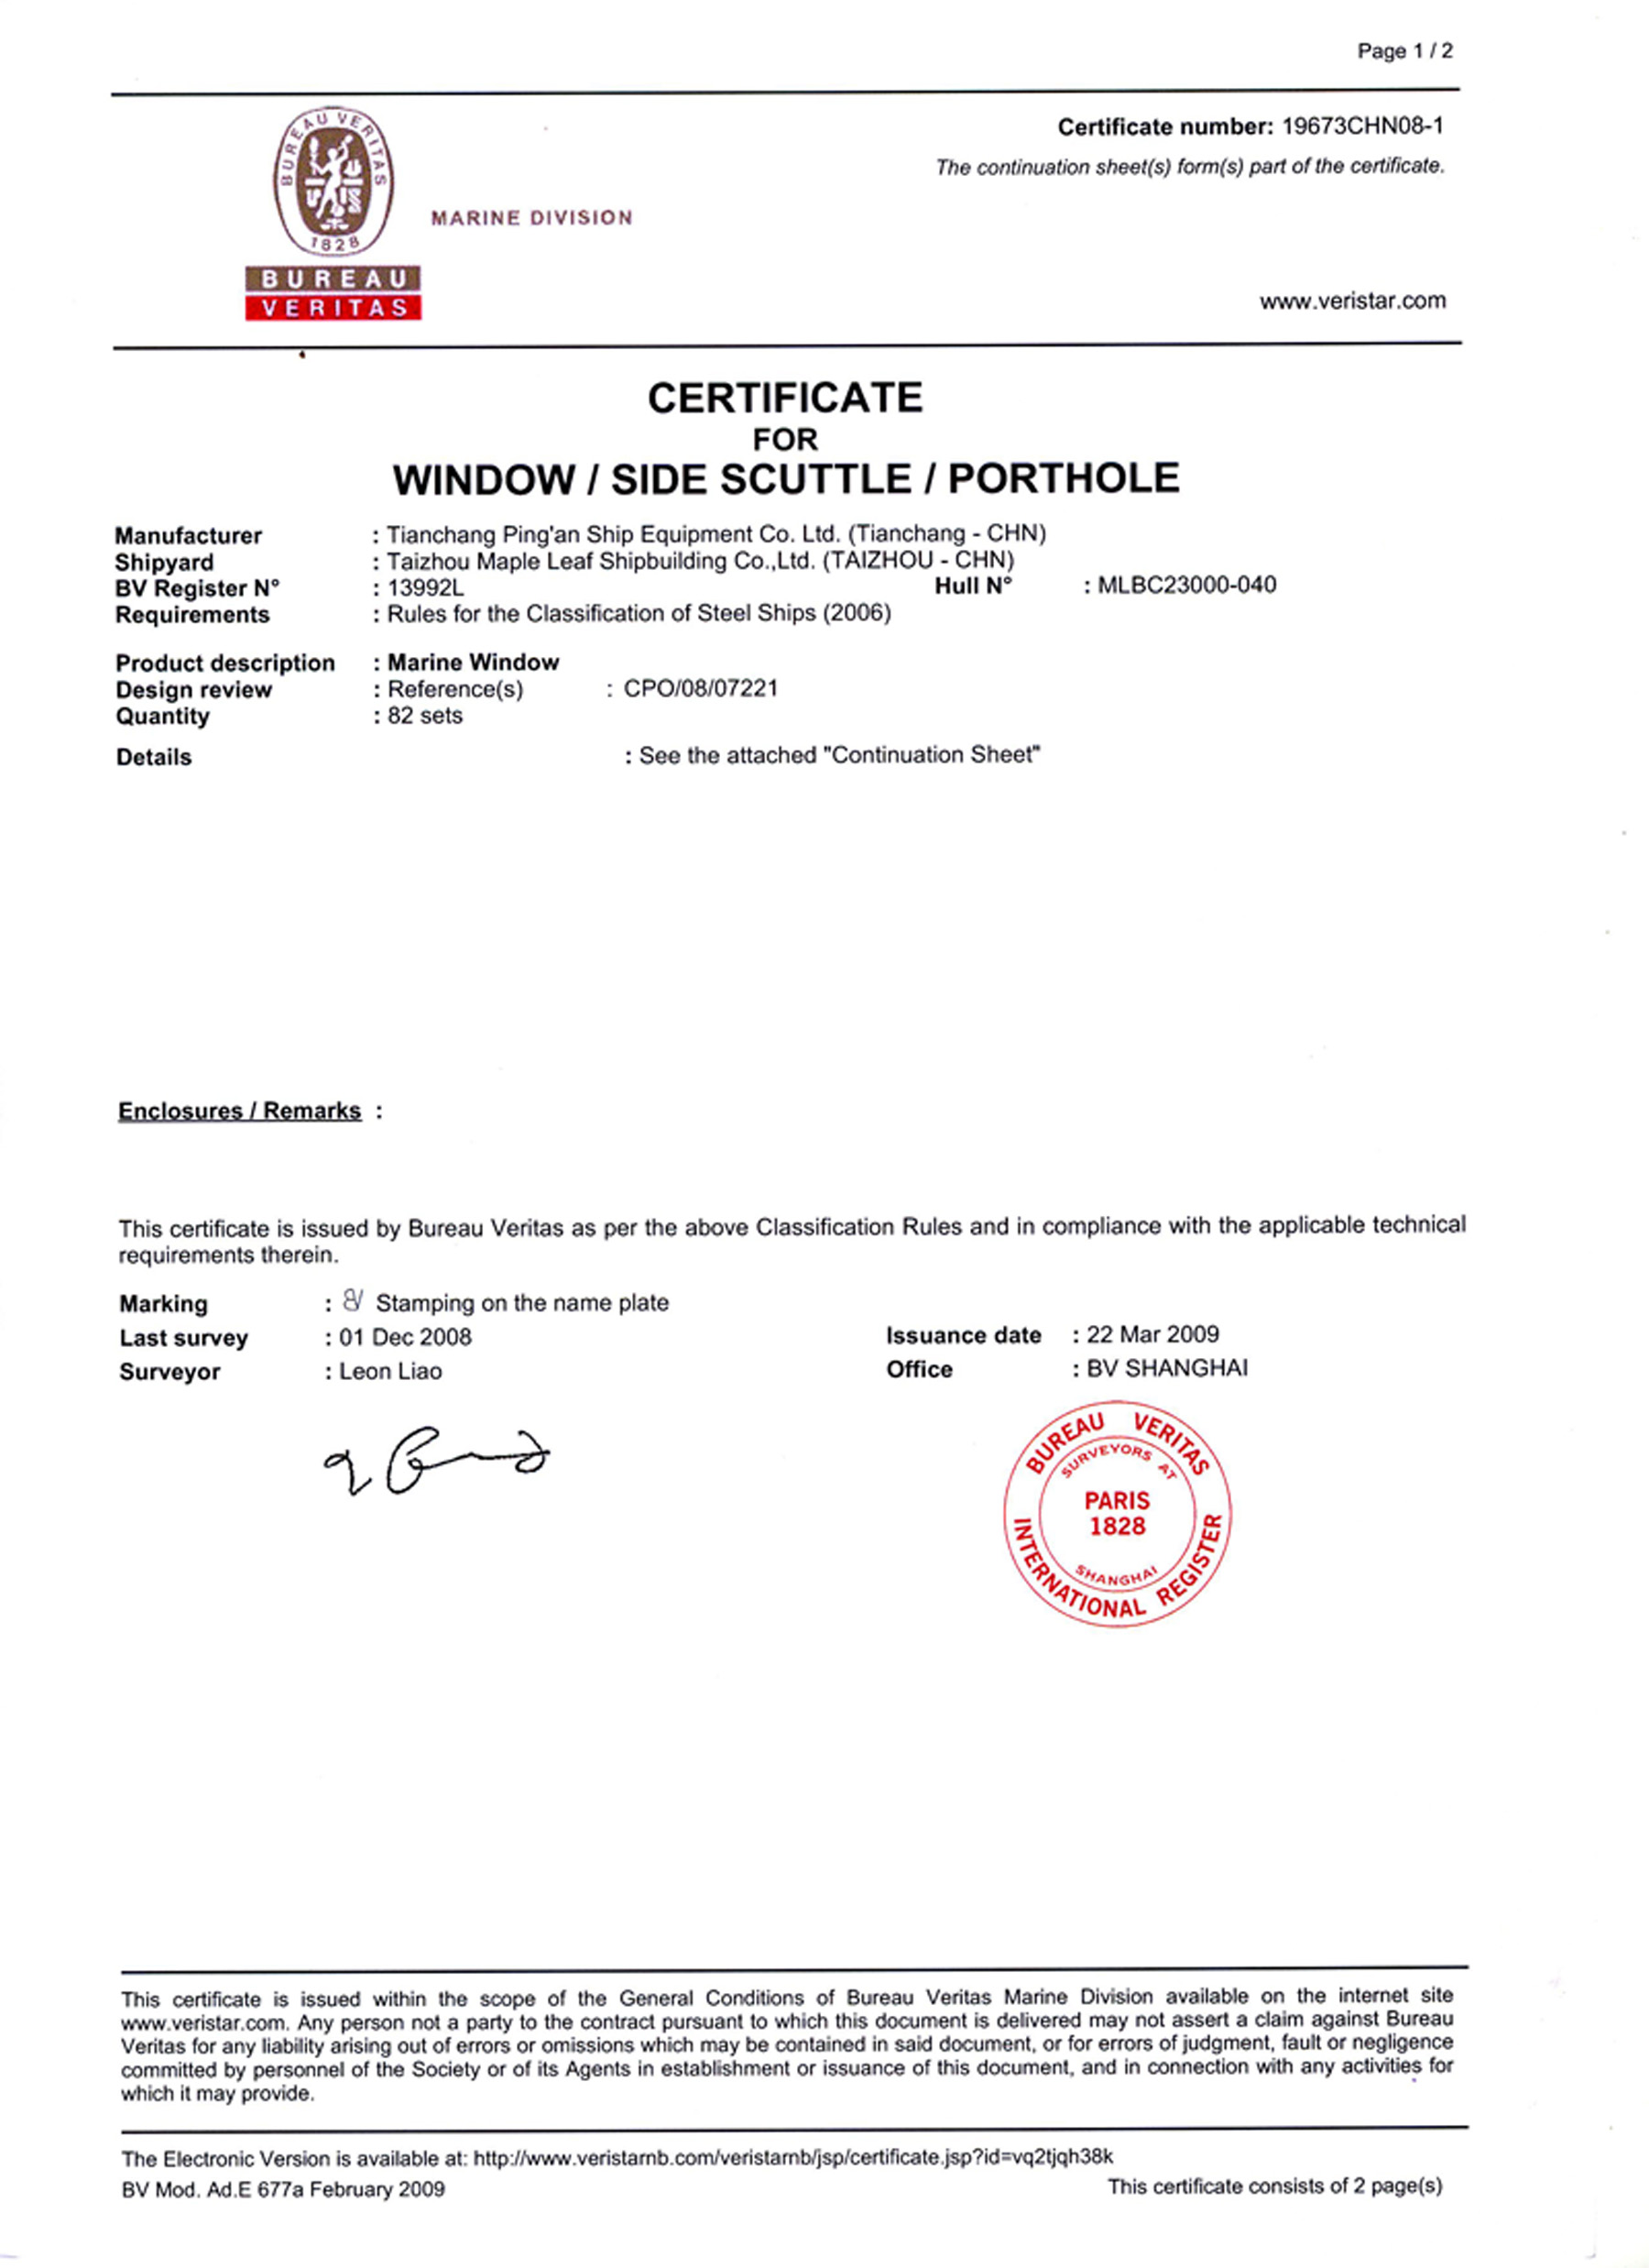 BV Certificate of side Scuttle/Window/Porthole